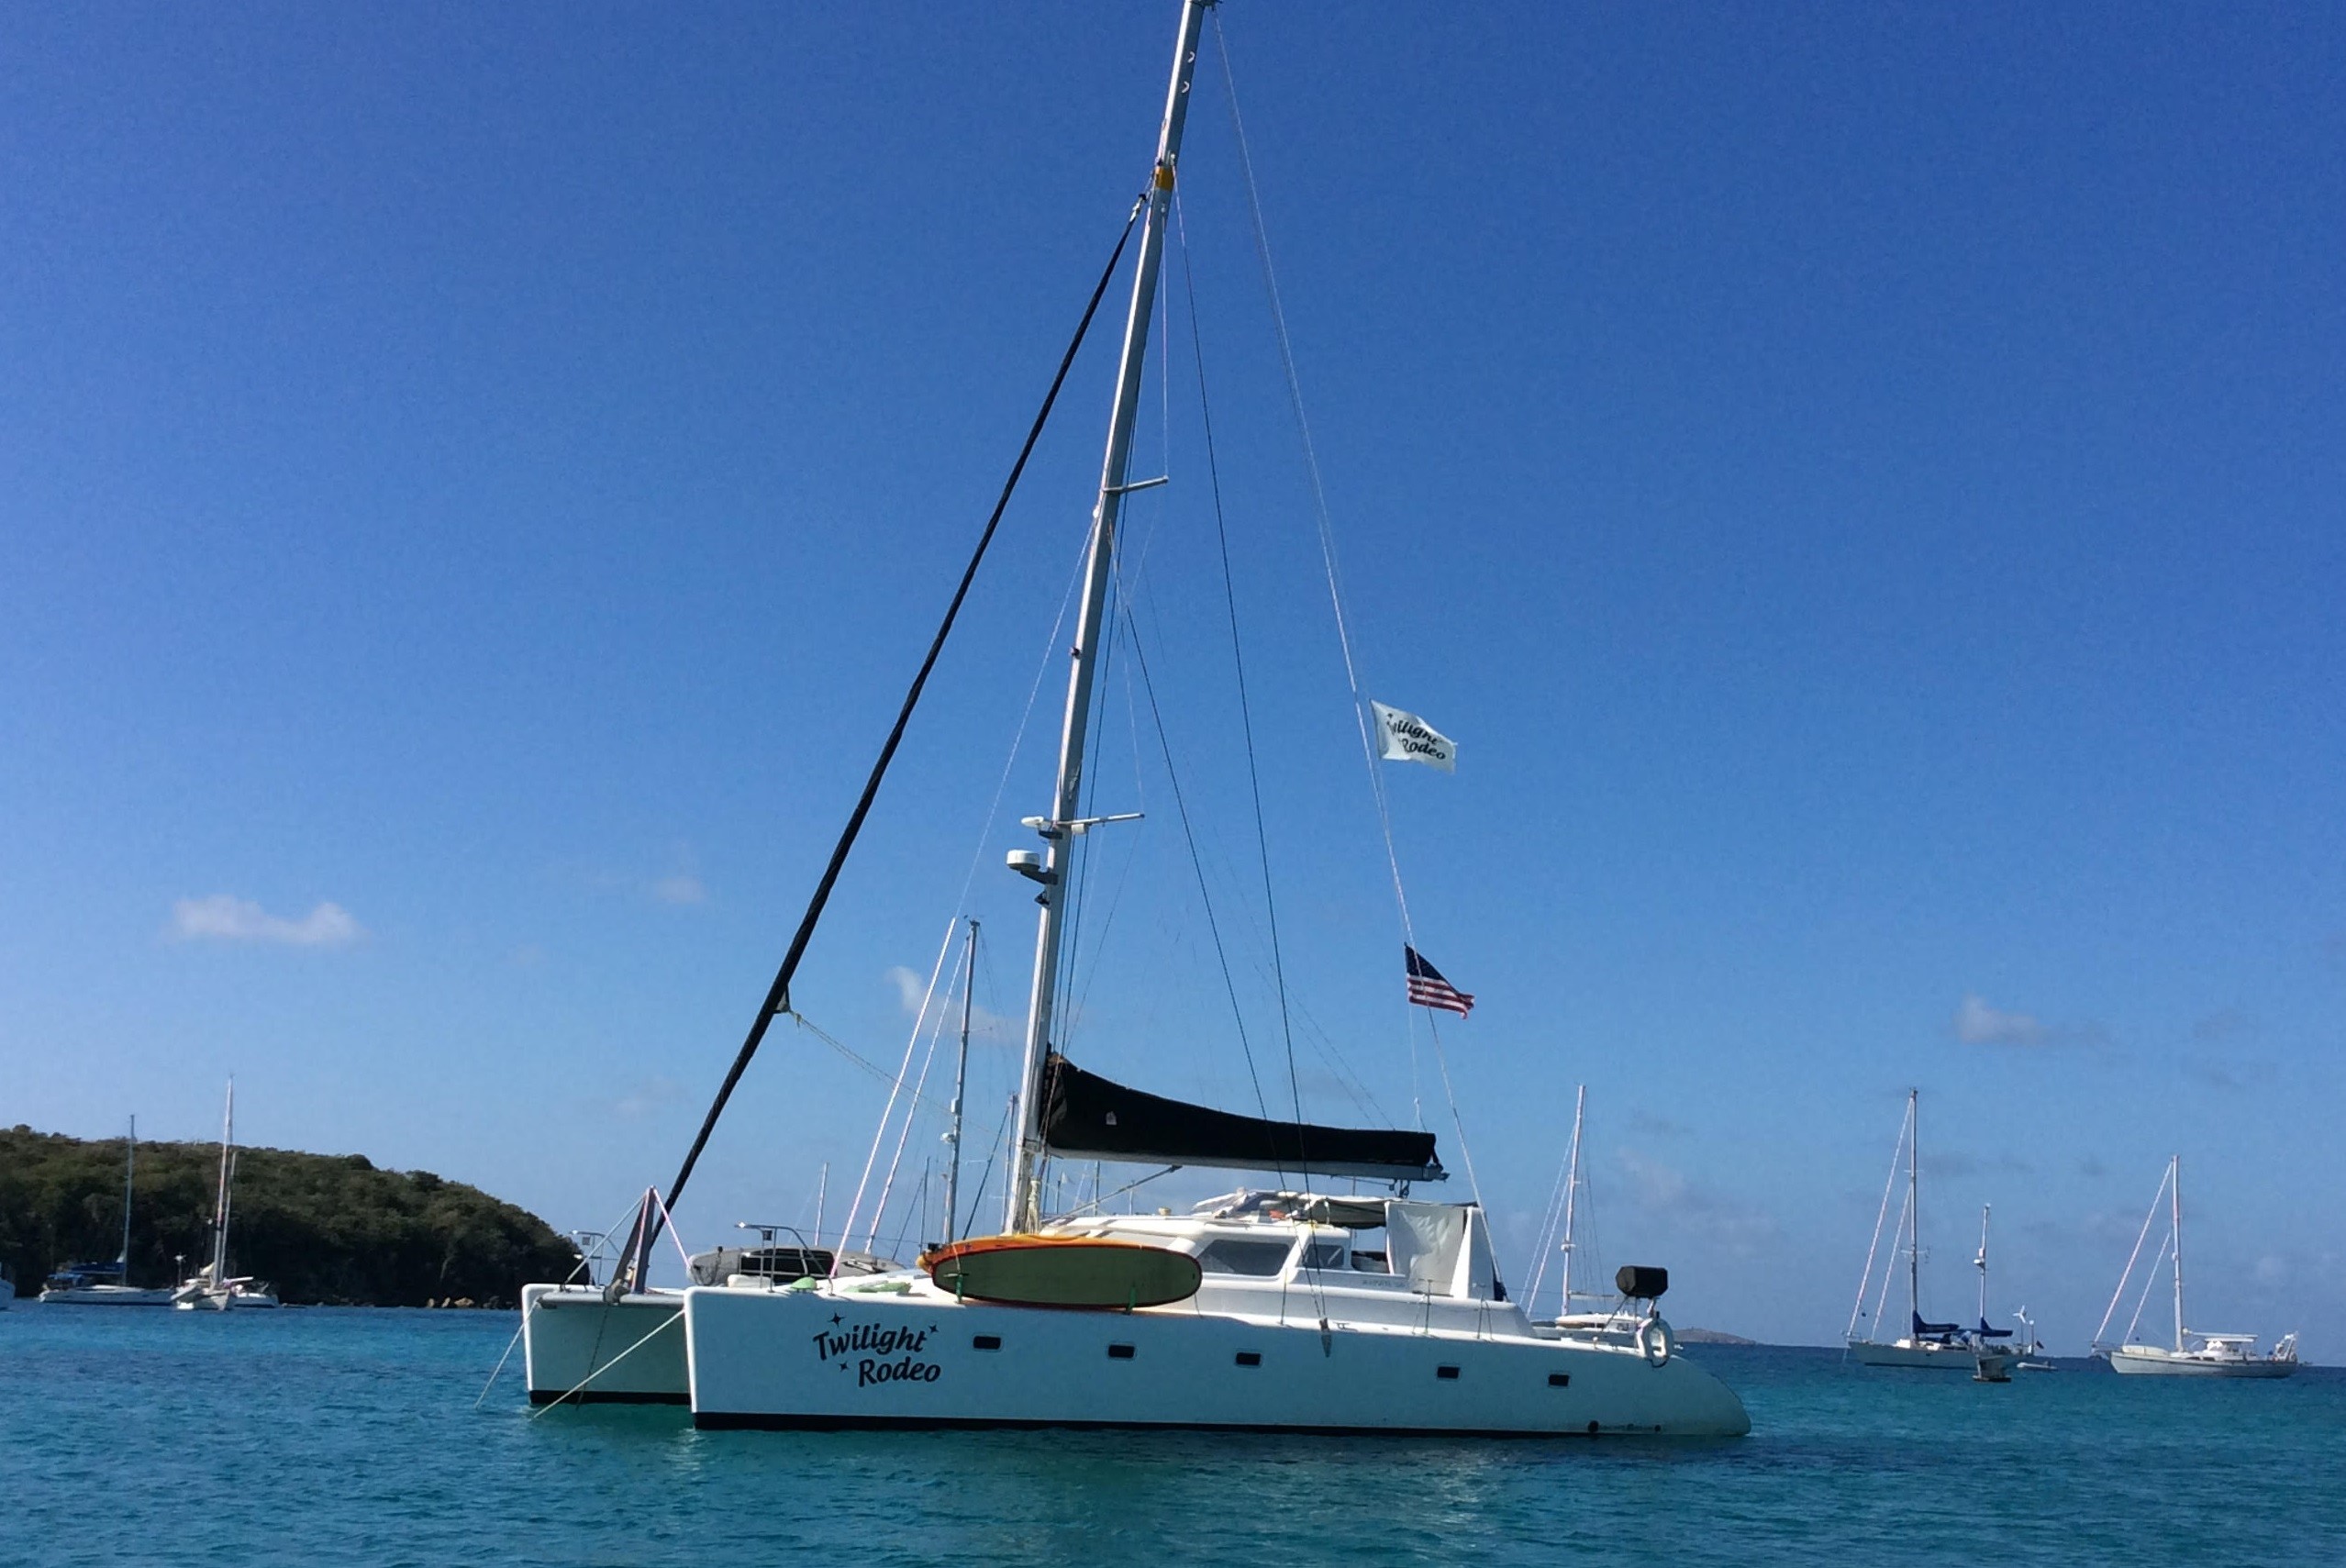 Virgin Islands Yacht Charter Twilight Rodeo